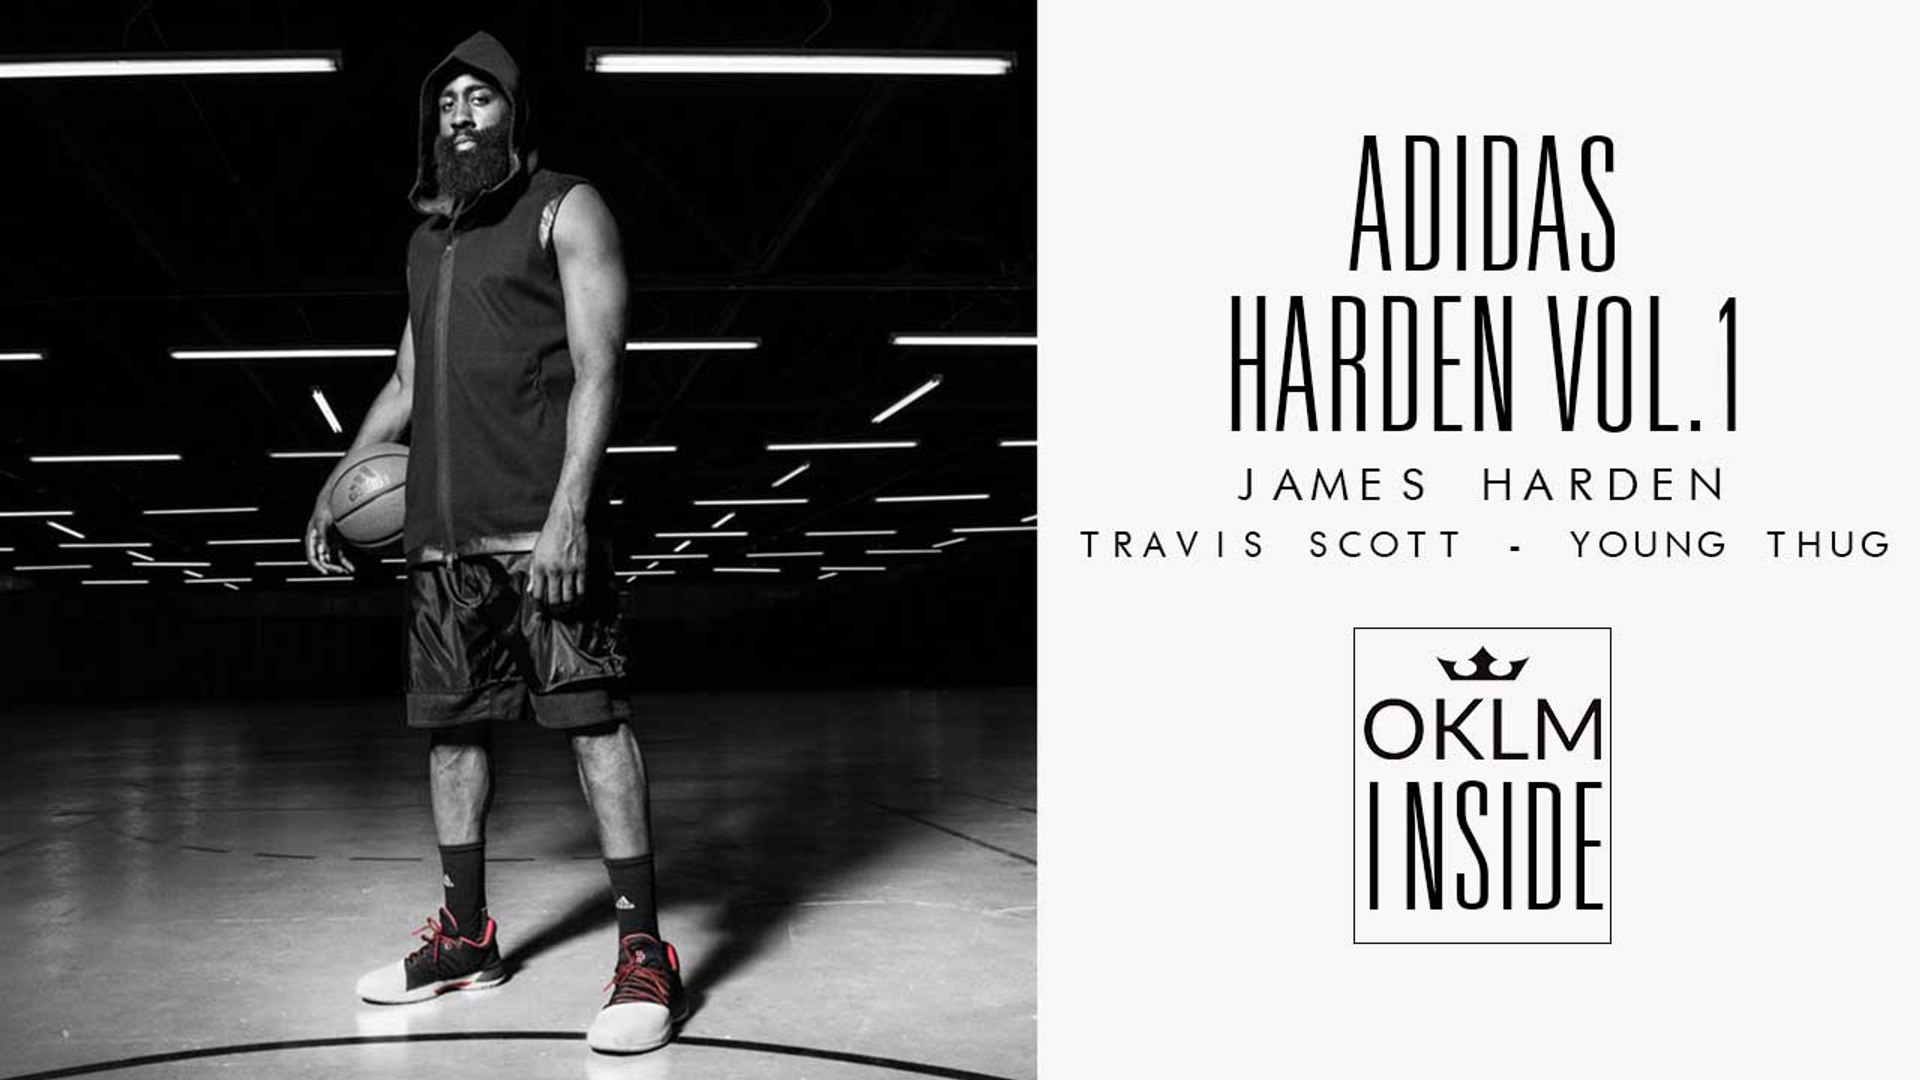 OKLM INSIDE - HARDEN VOL.1 (James Harden, Travis Scott, Young Thug...)